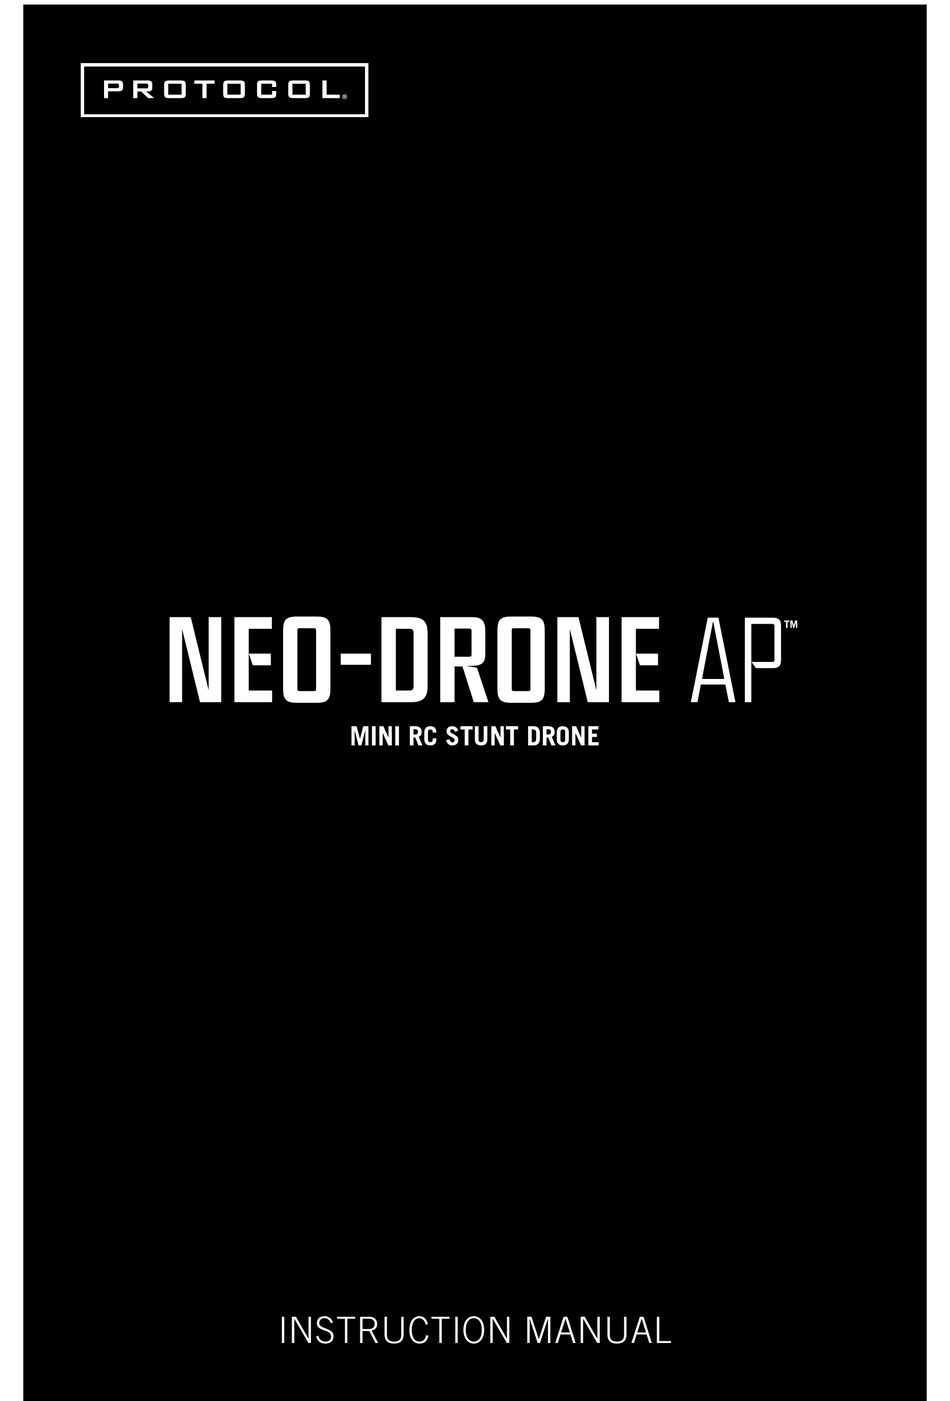 PROTOCOL NEO-DRONE AP INSTRUCTION MANUAL Pdf Download | ManualsLib